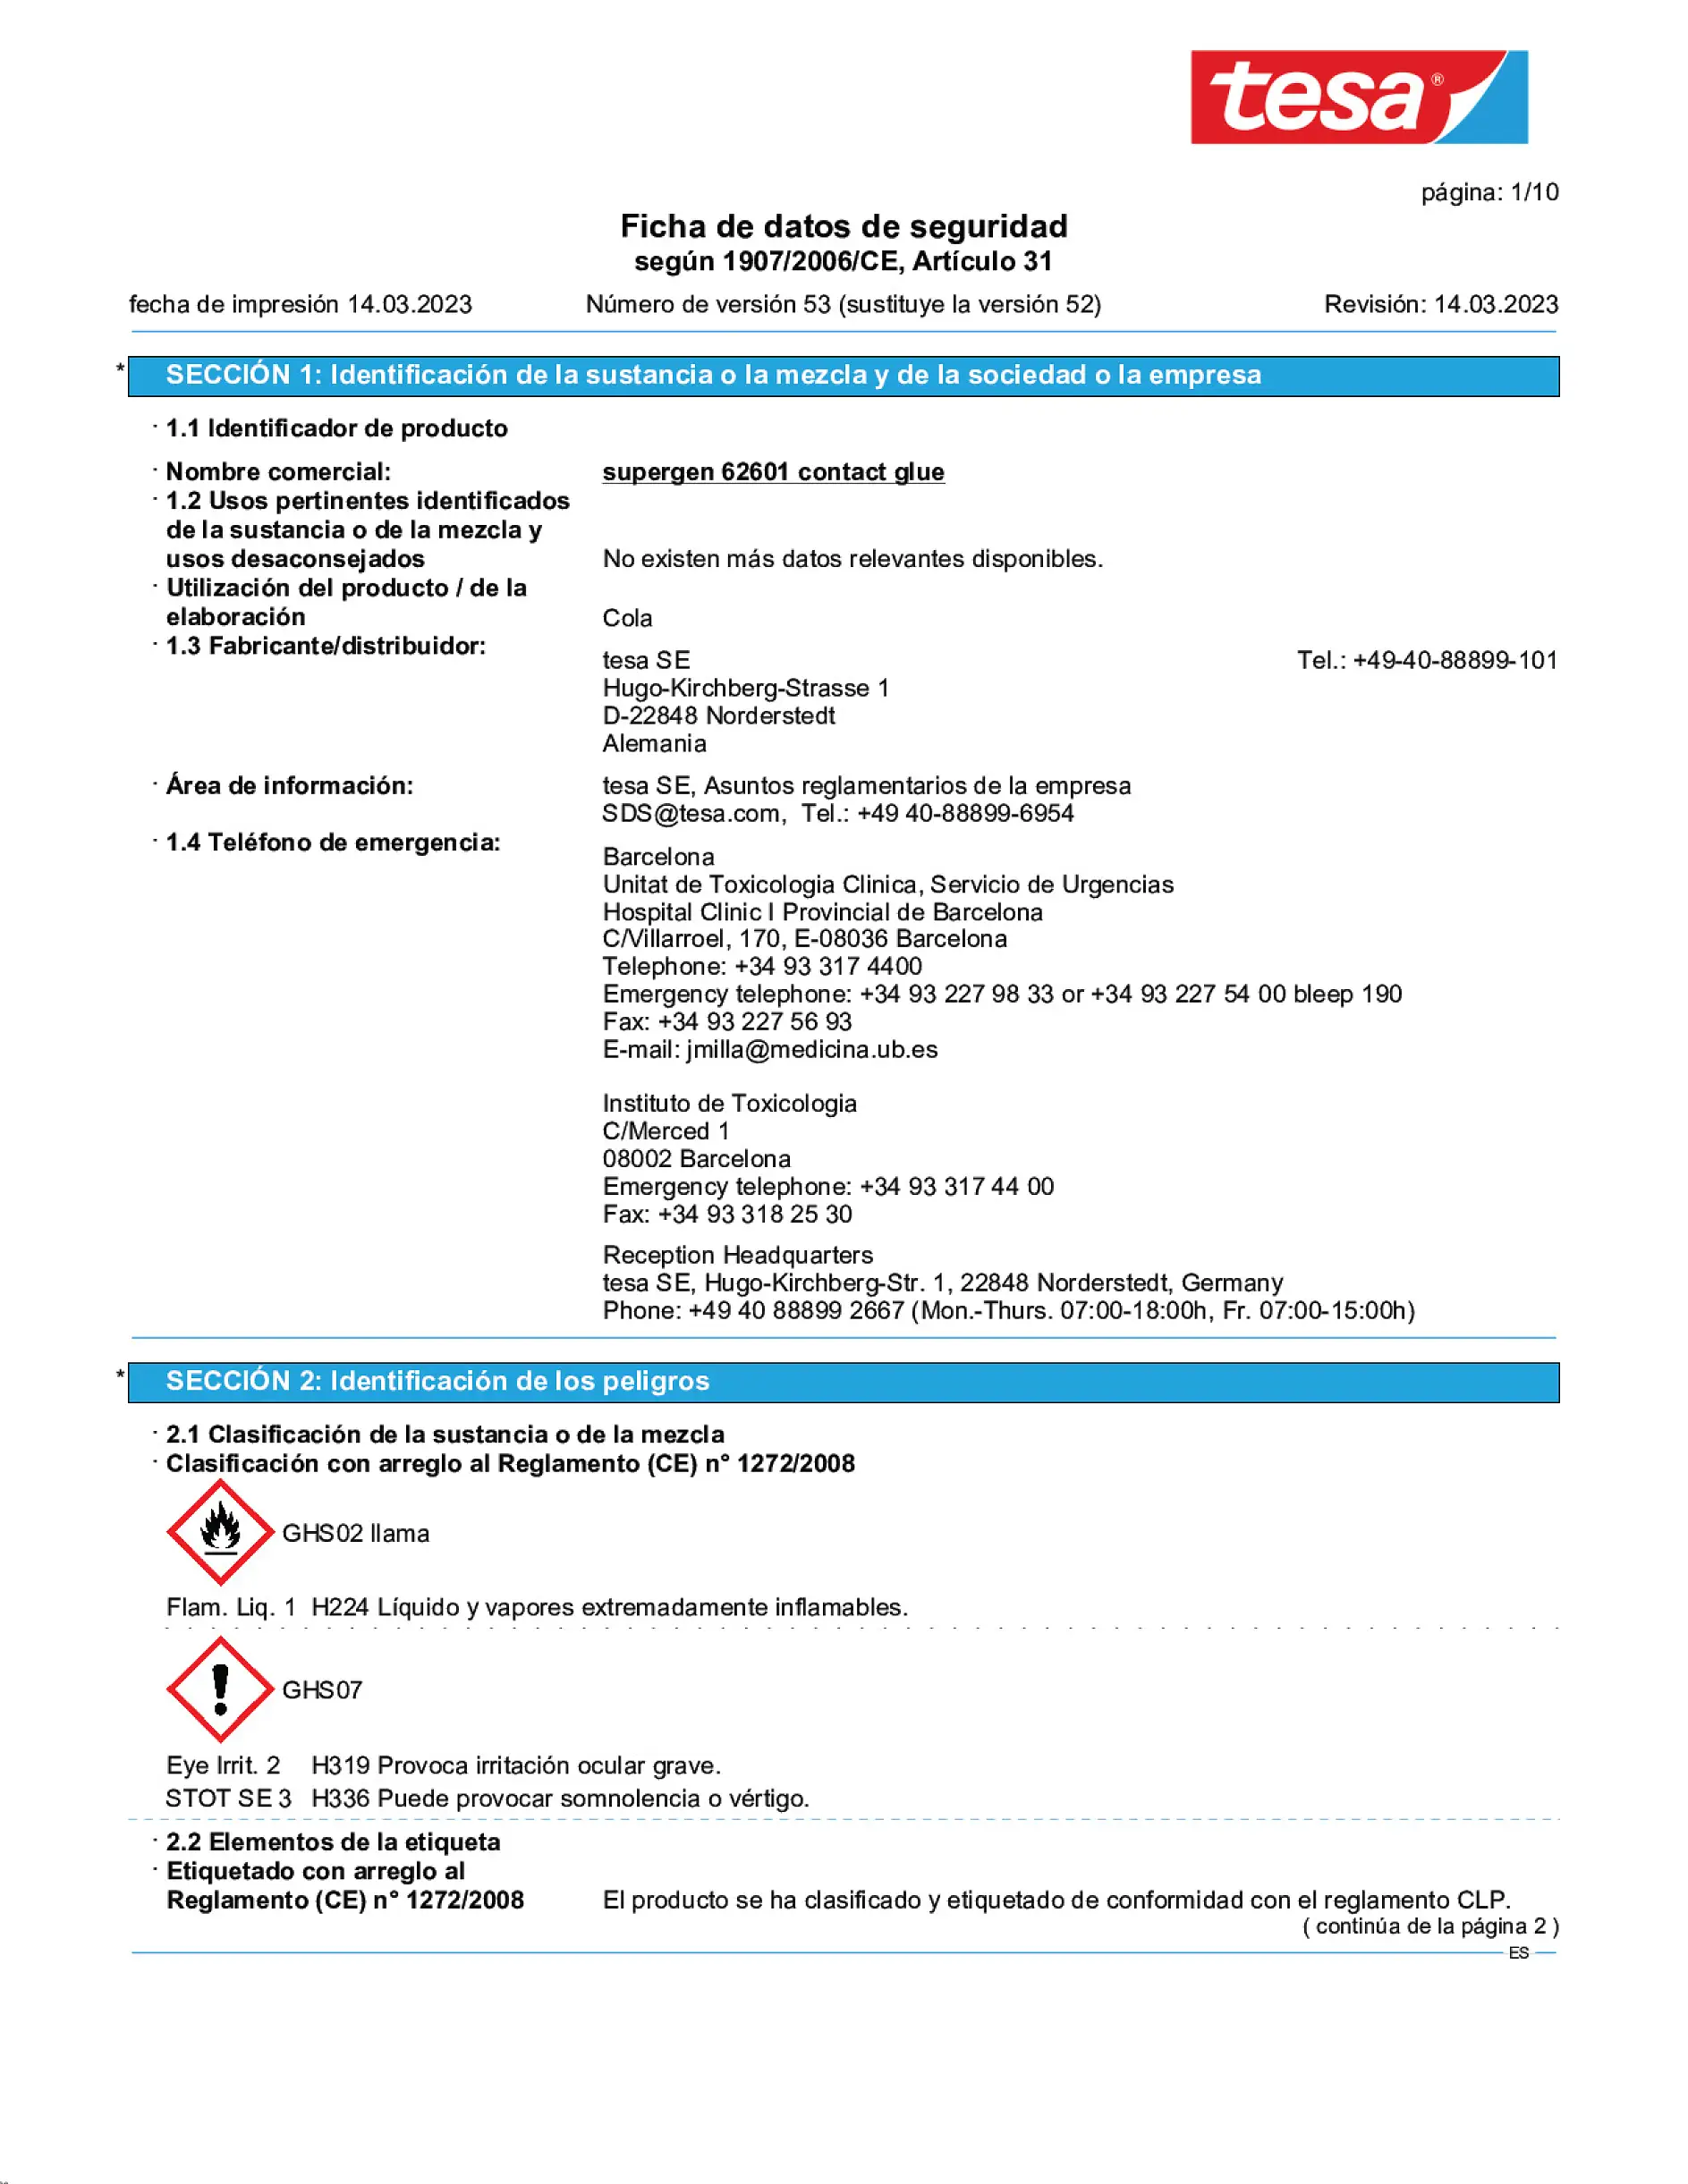 Safety data sheet_Supergen® 62601_es-ES_v53